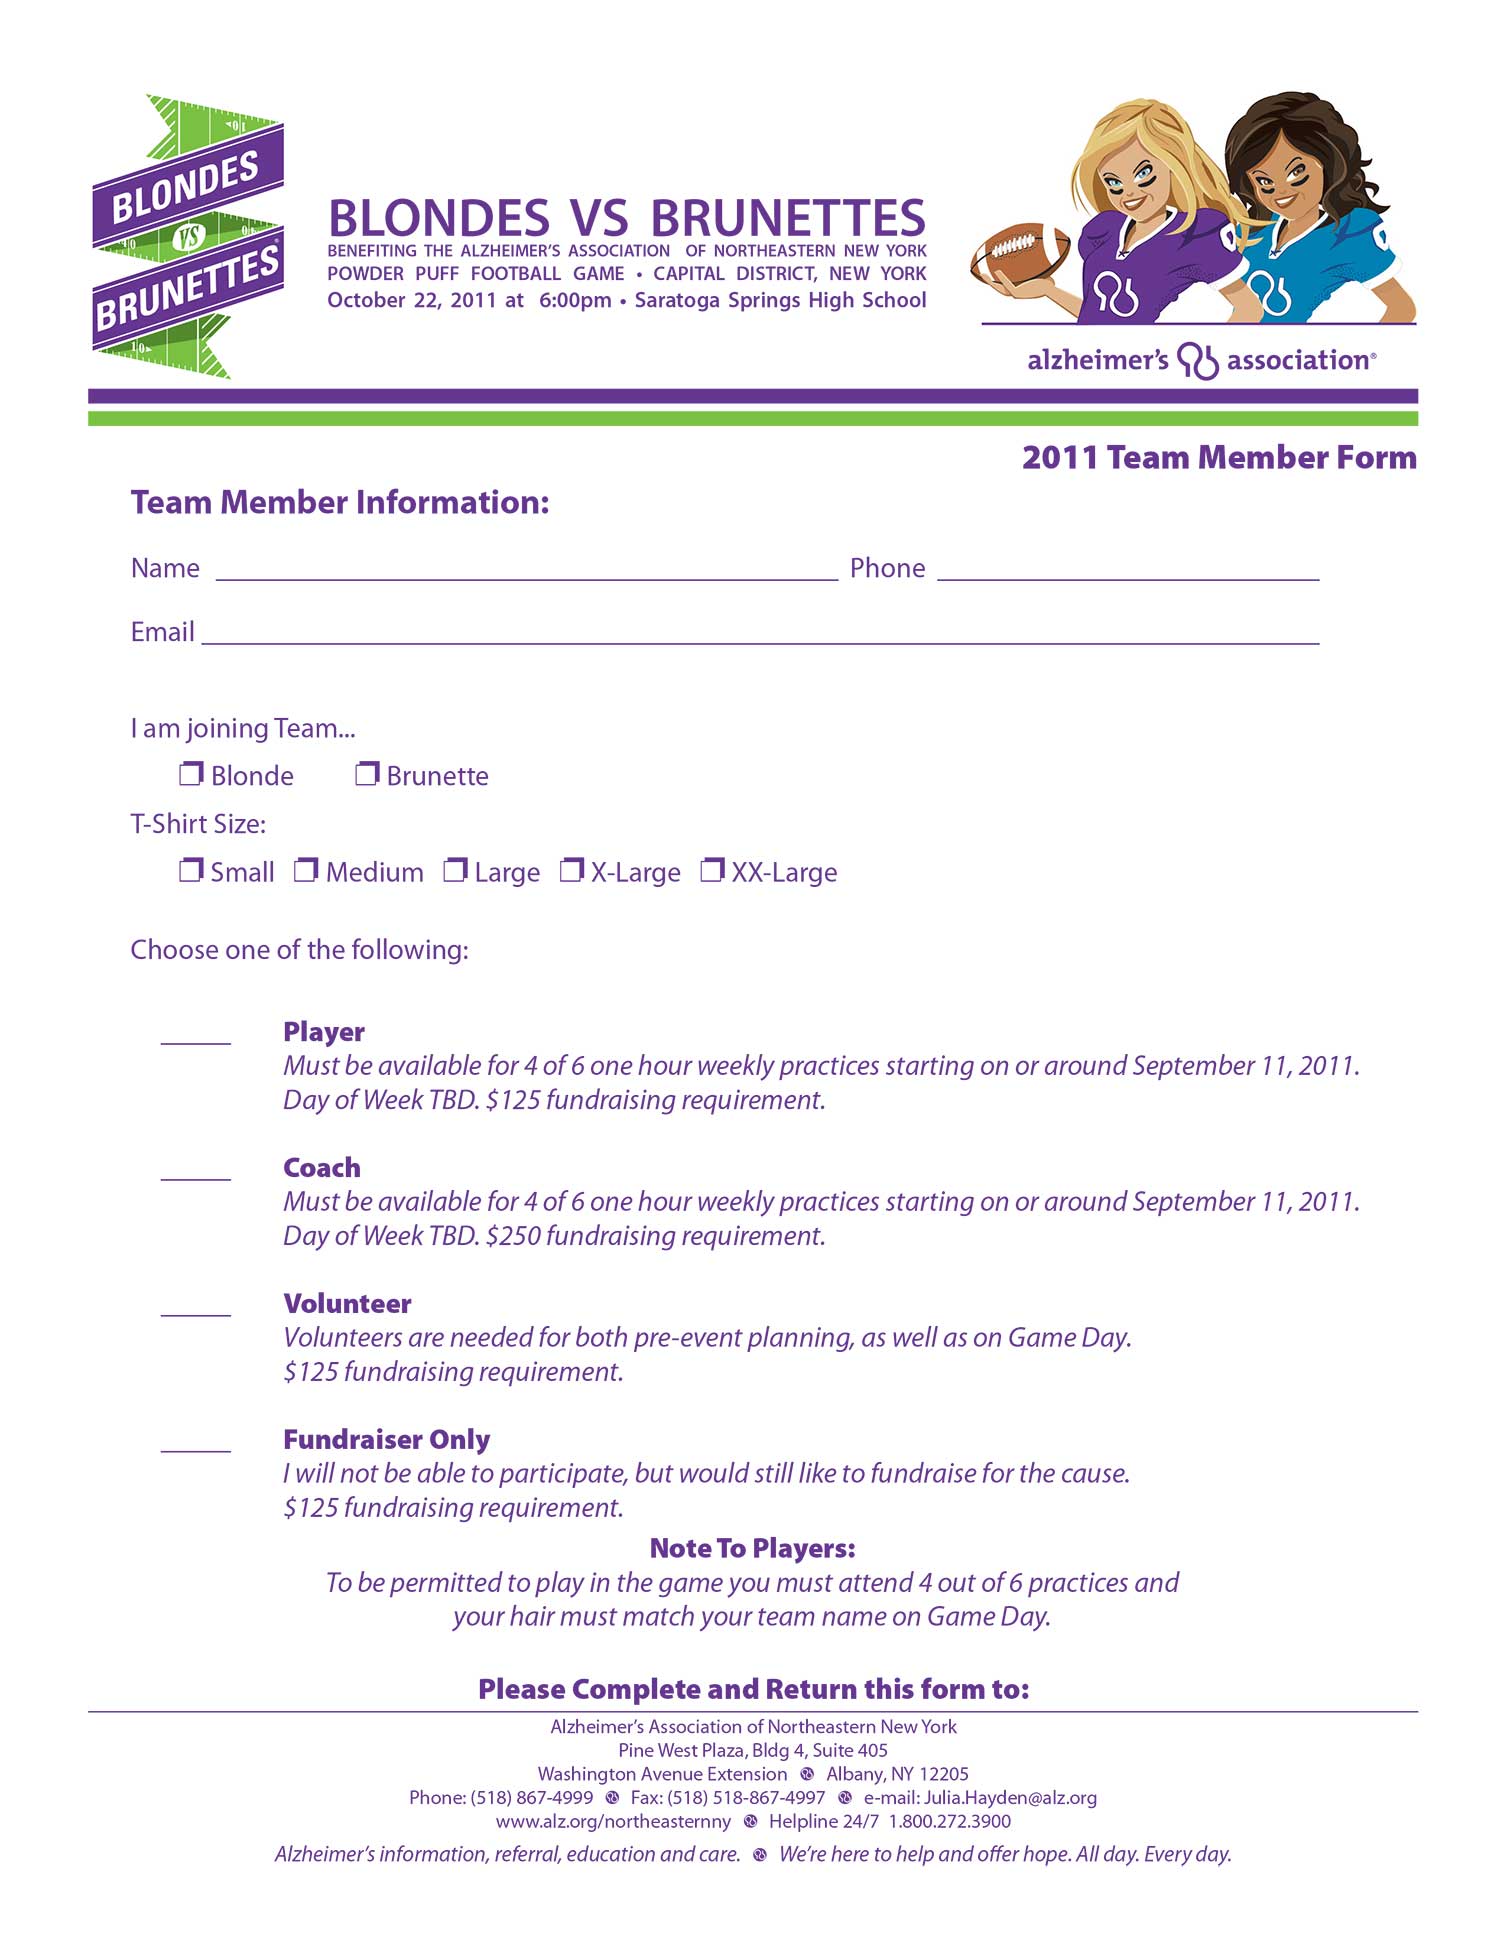 Image of information form design for Blondes vs. Brunettes alzheimer's association football fundraiser event in Saratoga Springs, New York.